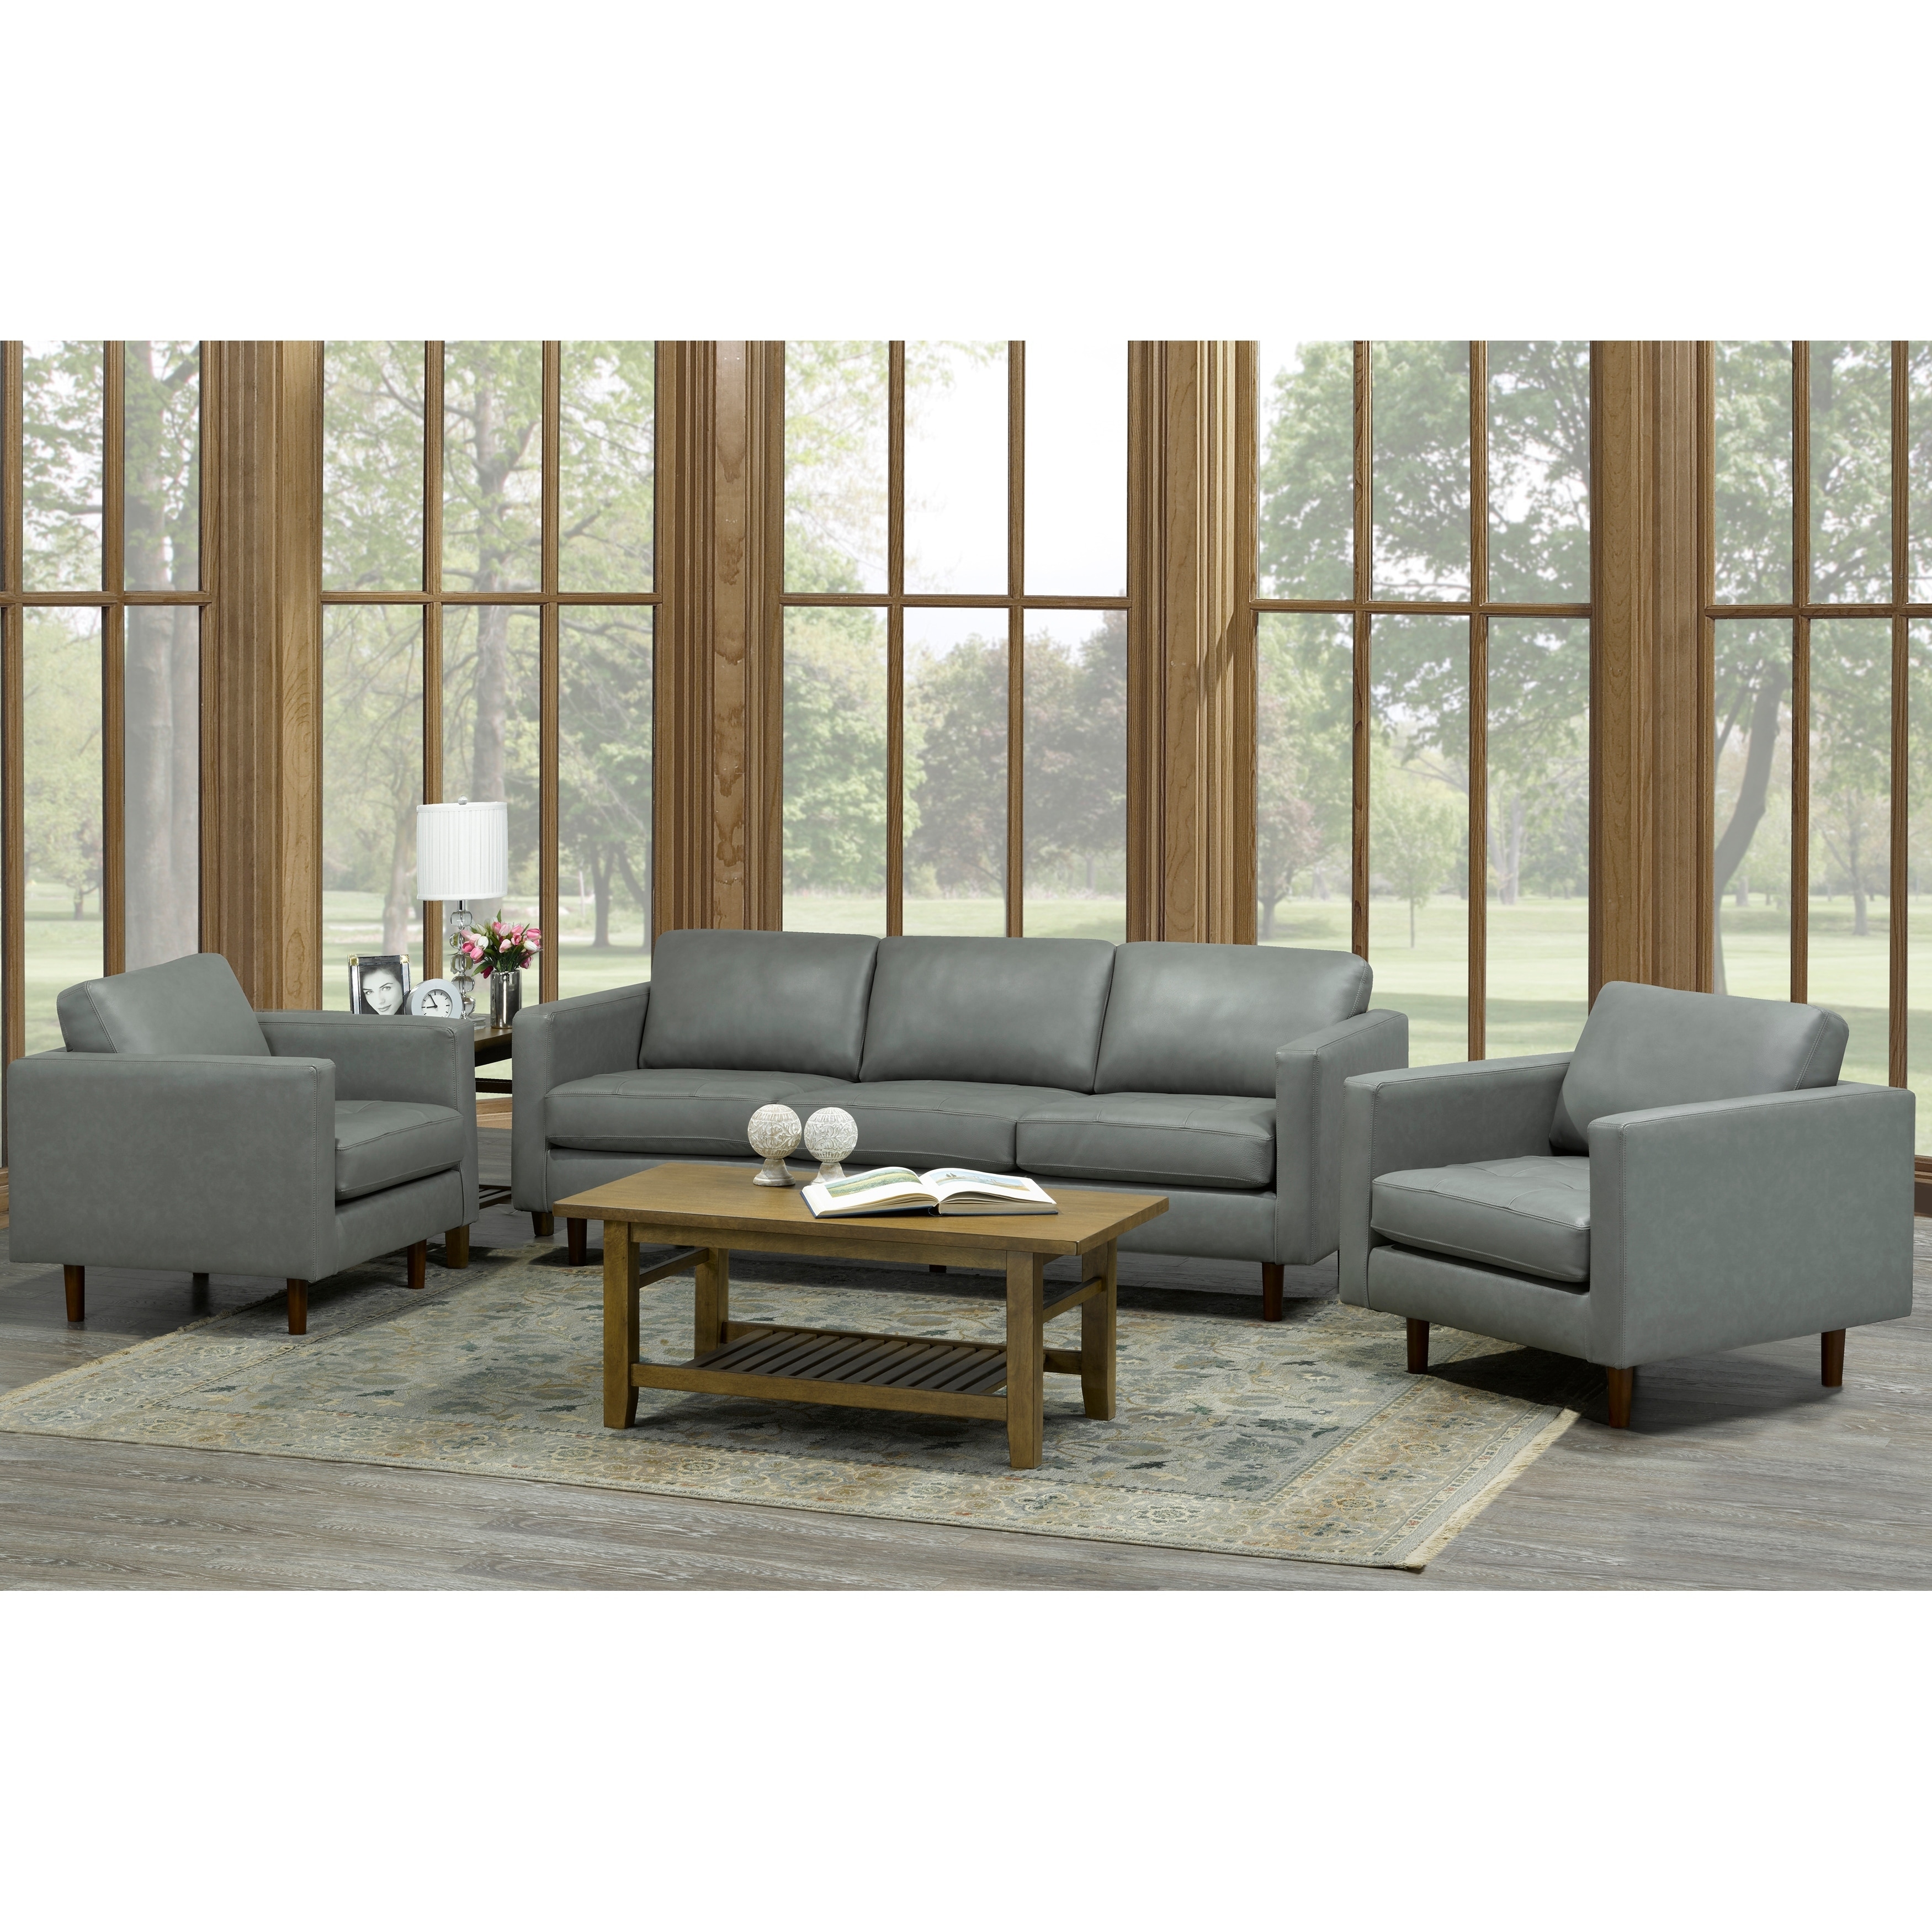 Booker 3 Piece Grey Top Grain Leather Living Room Set On Sale Overstock 20847566